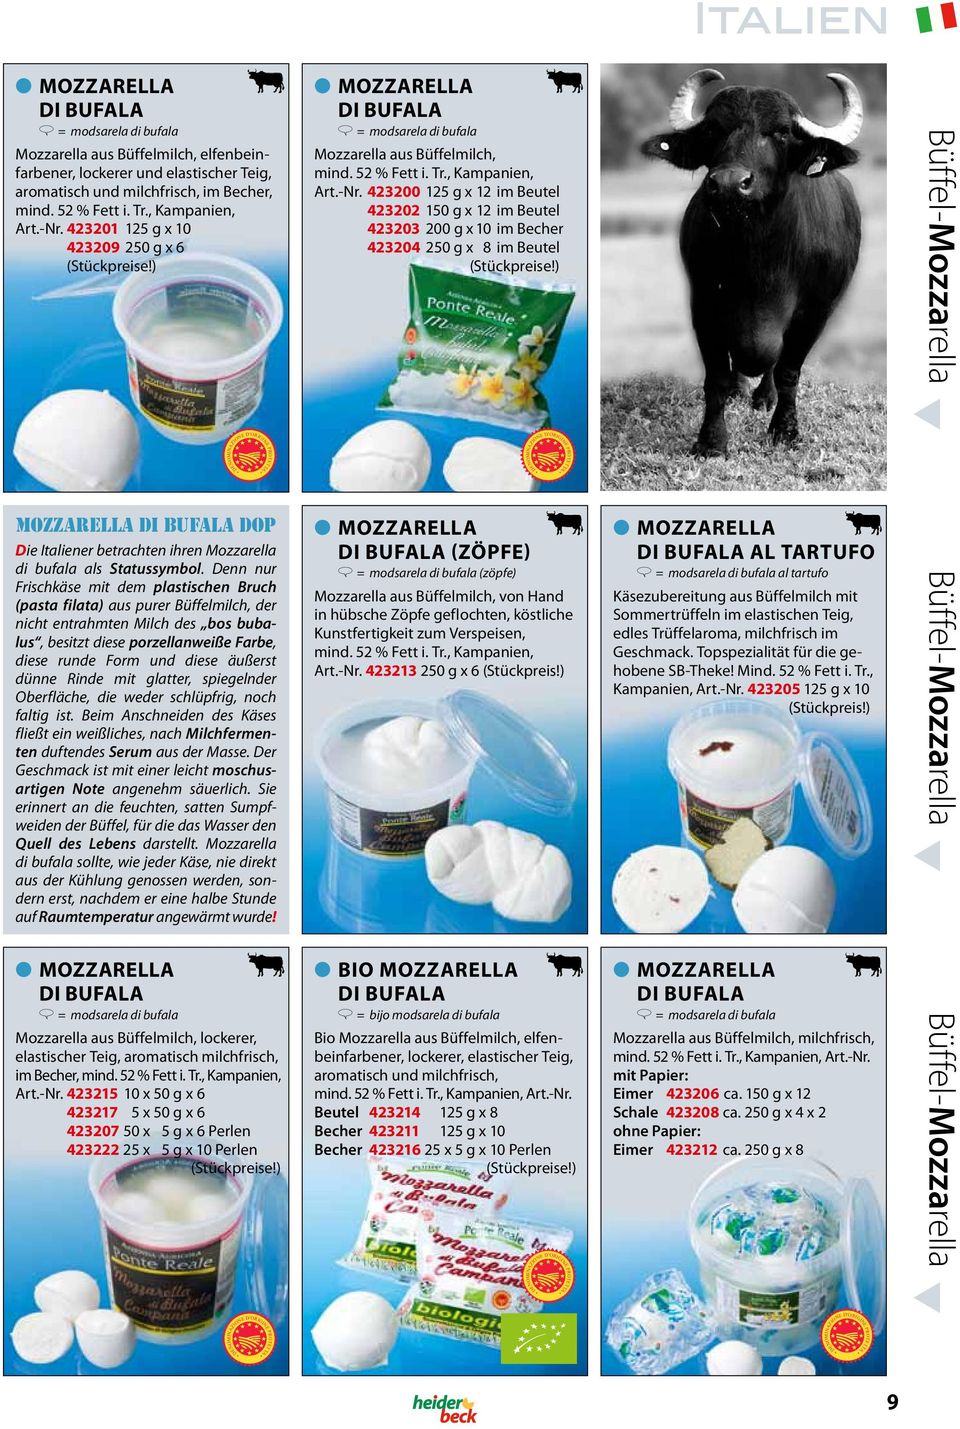 ) mozzarella di bufala C = modsarela di bufala Mozzarella aus Büffelmilch, mind. 52 % Fett i. Tr., Kampanien, Art.-Nr.